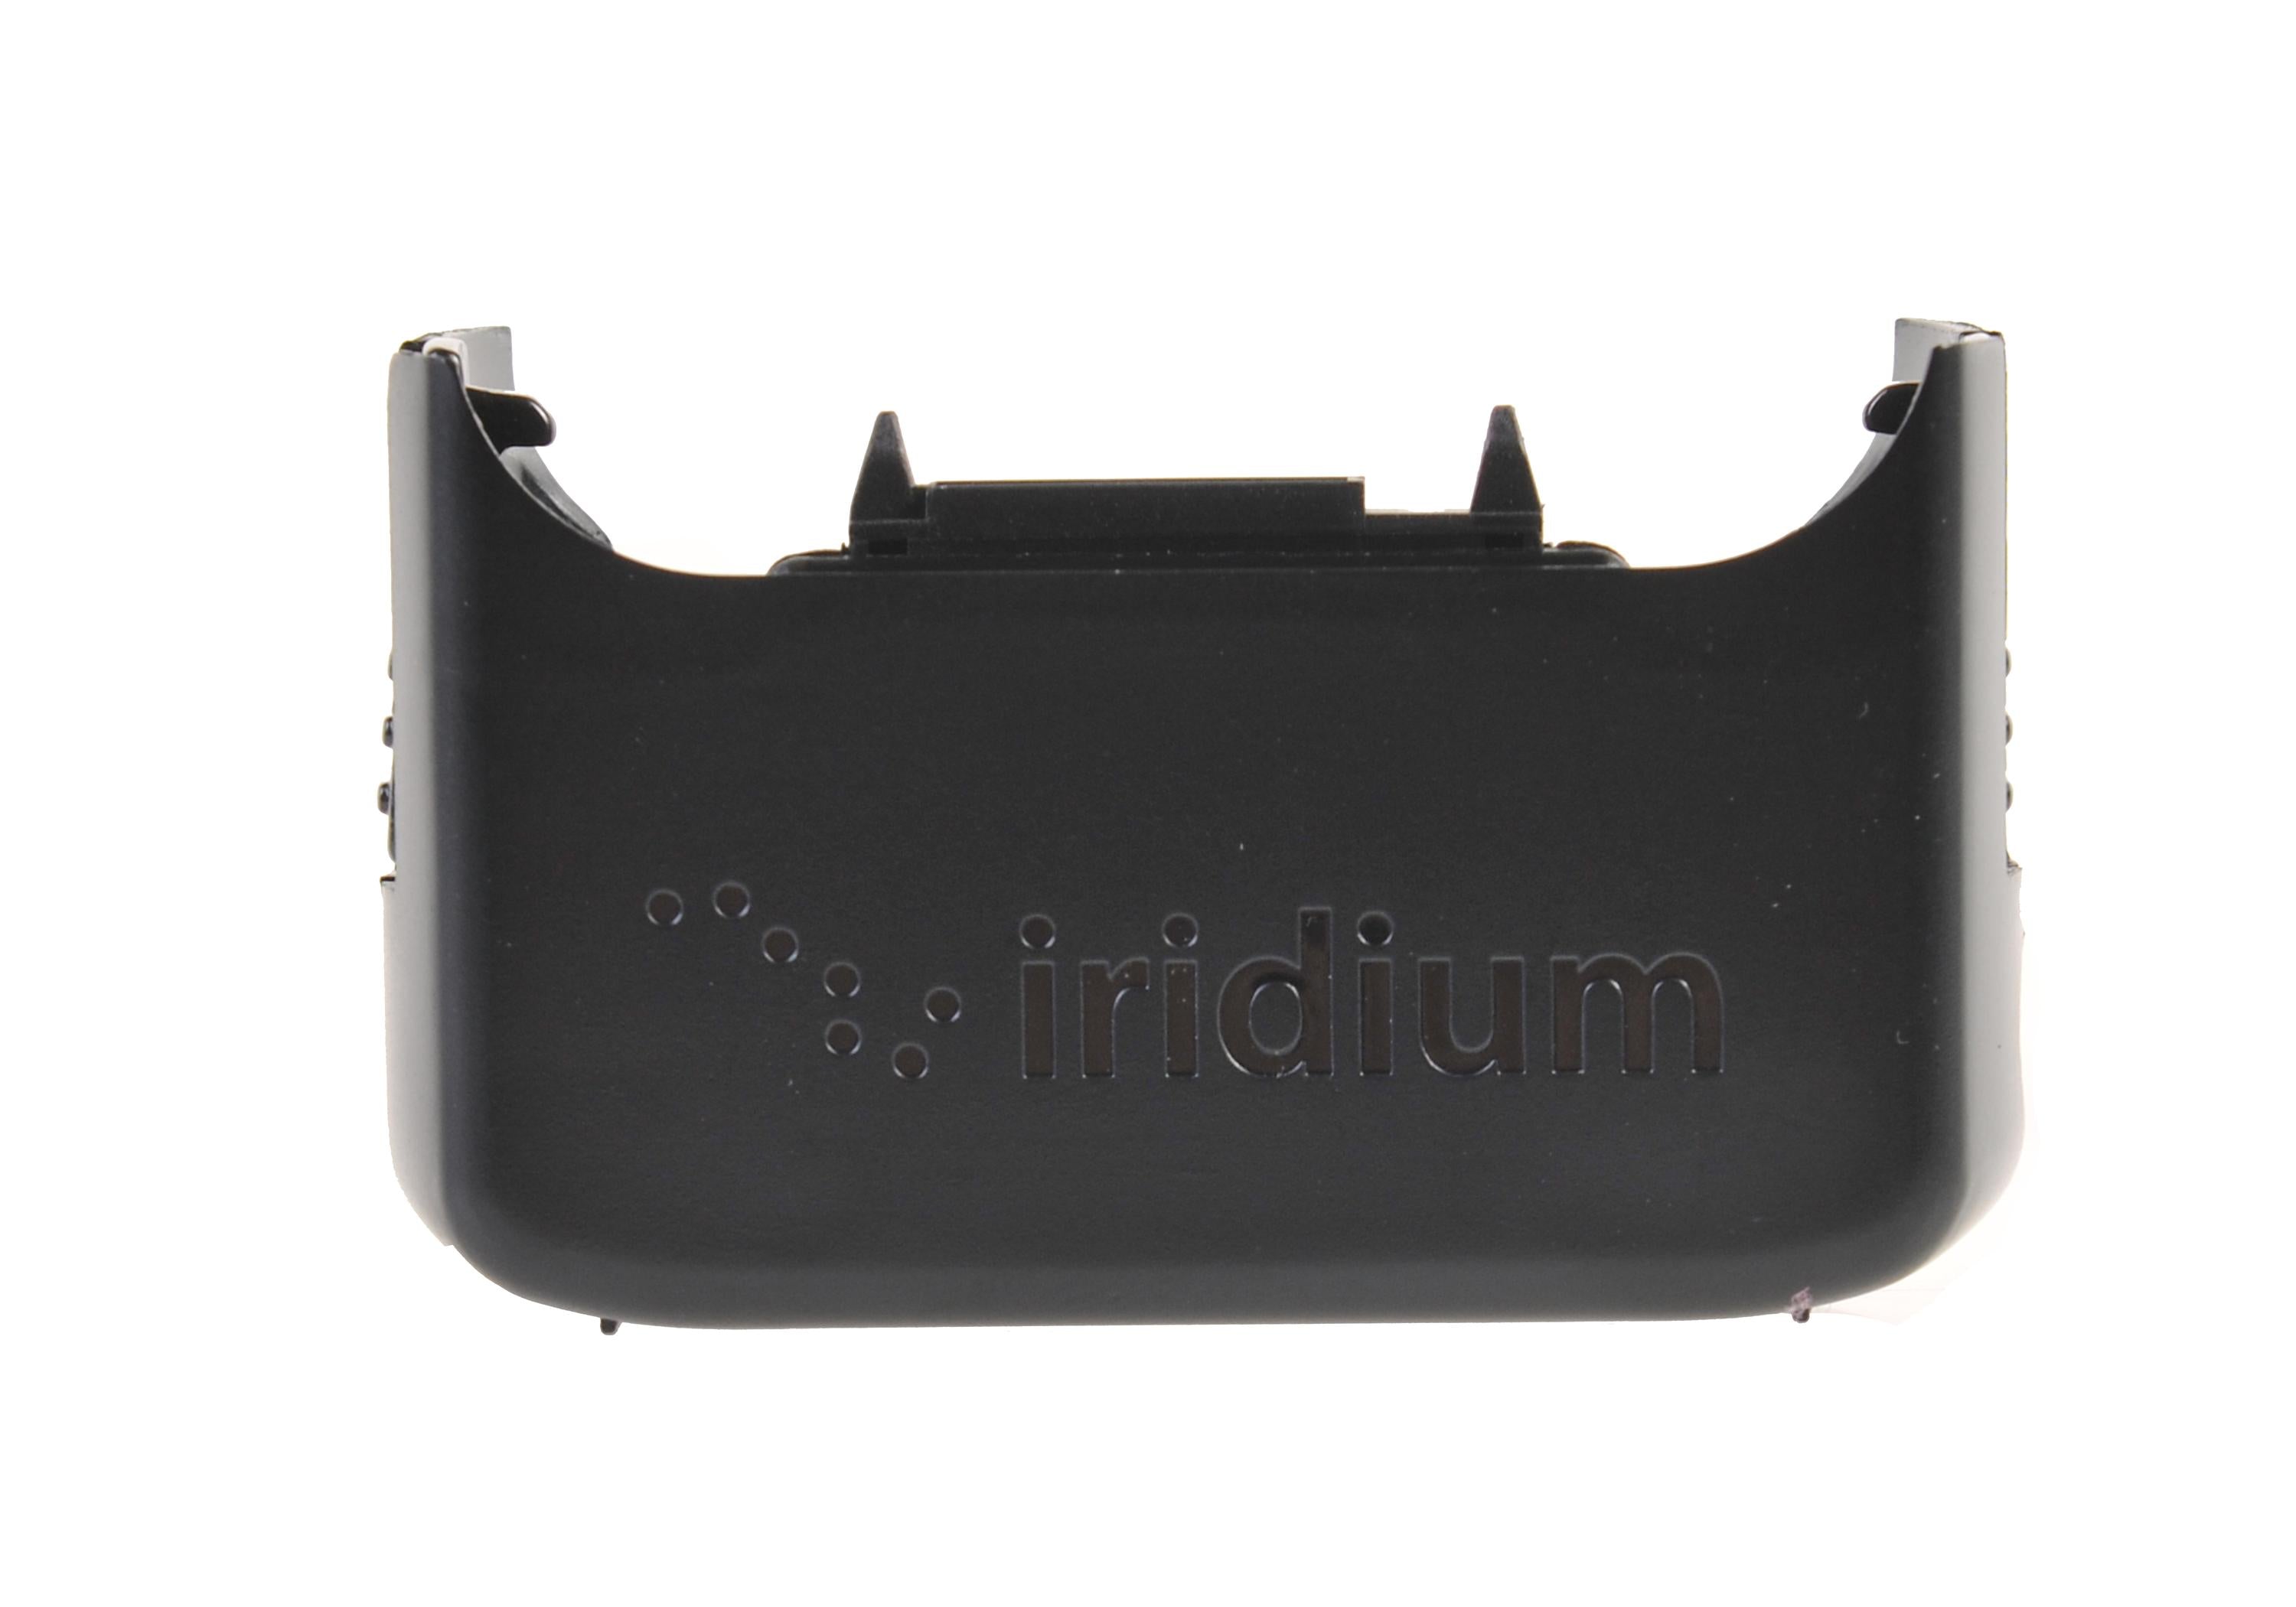 Iridium 9575 Extreme Adapter with Power & USB